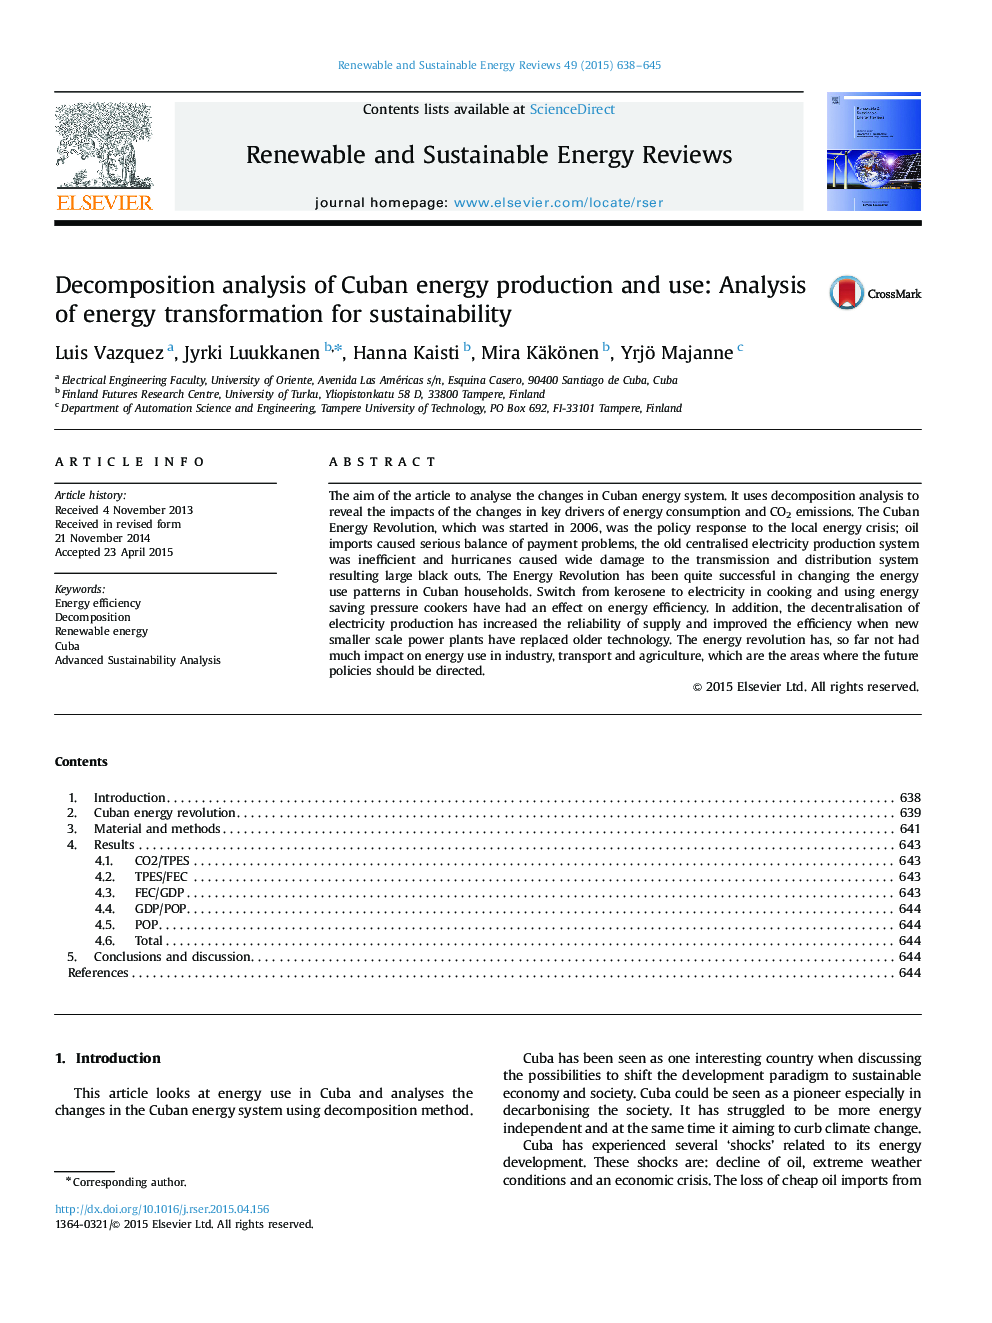 Decomposition analysis of Cuban energy production and use: Analysis of energy transformation for sustainability